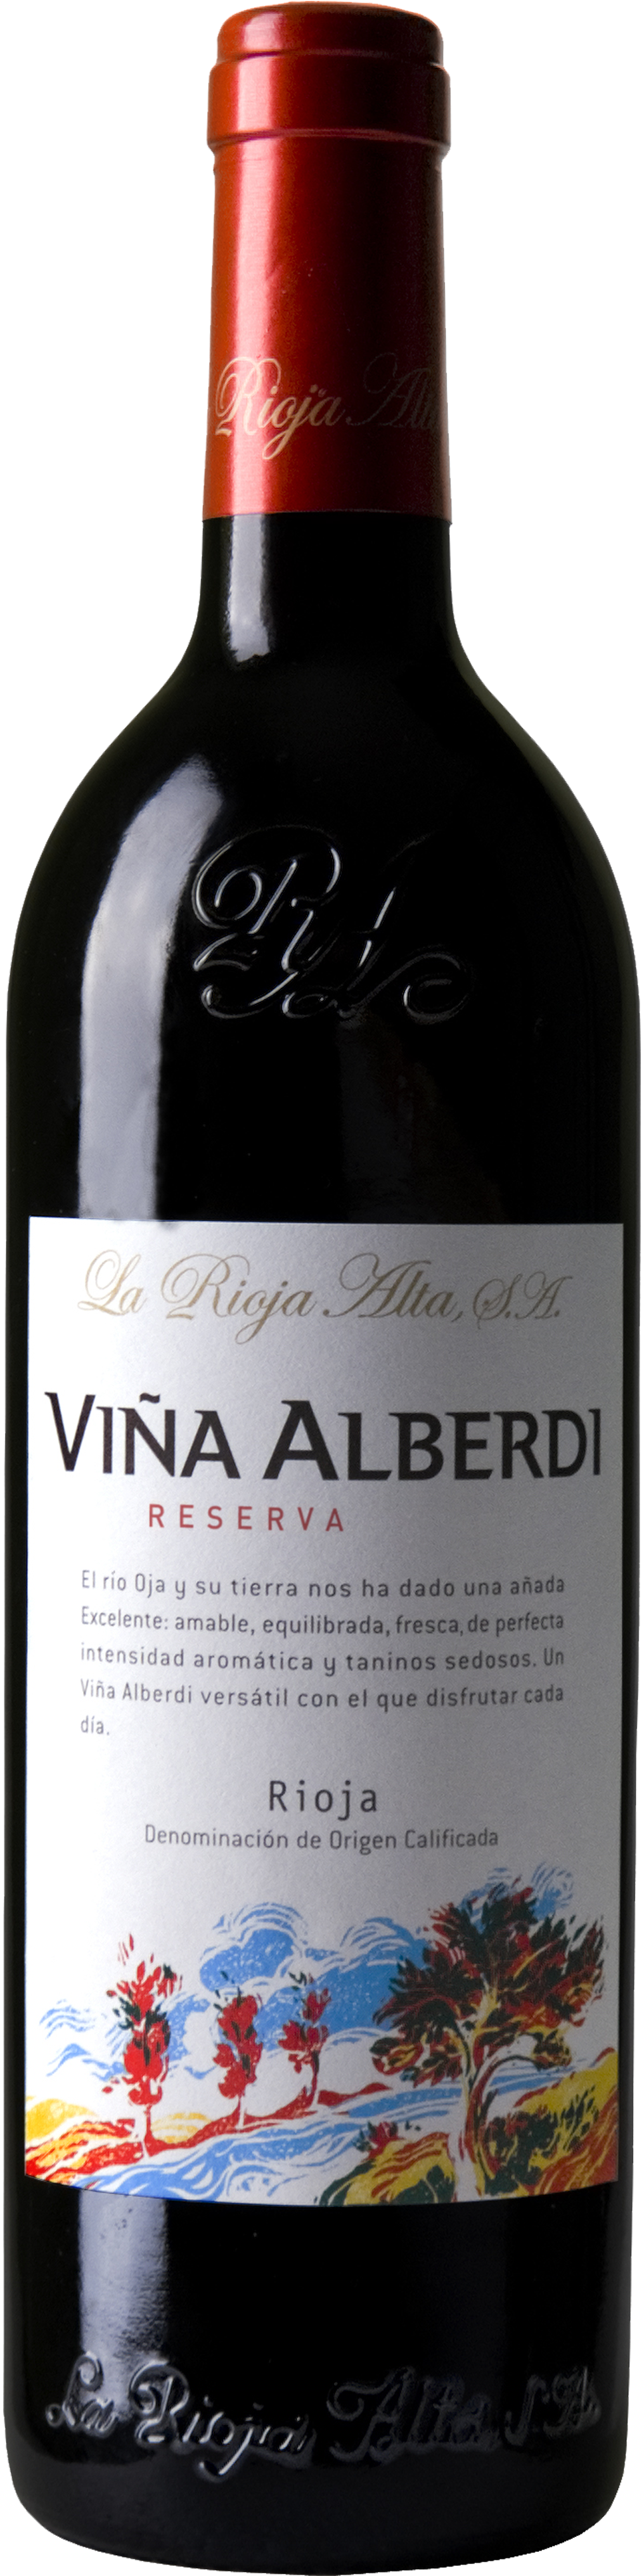 Bottle shot of 2008 Viña Alberdi Reserva